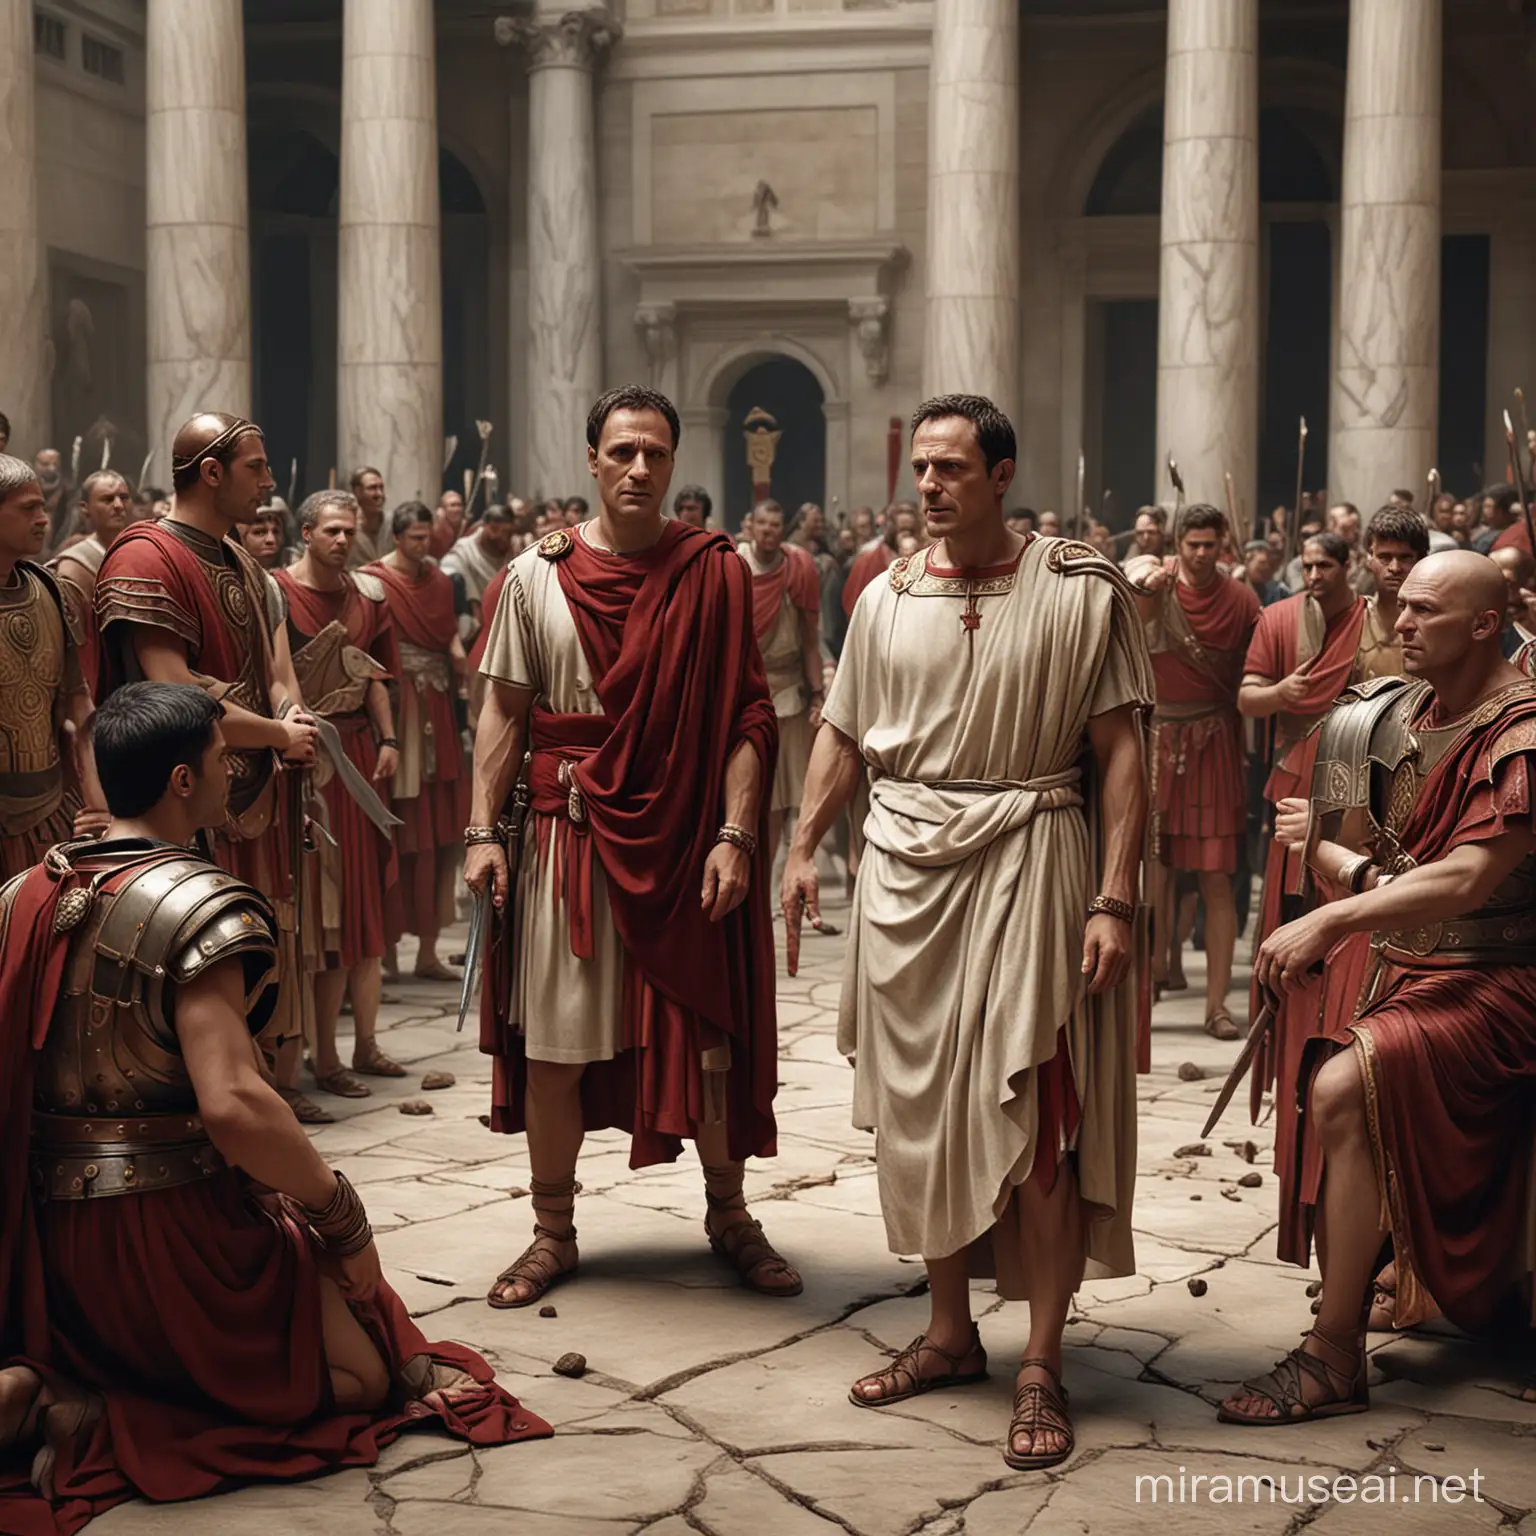 Julius Caesar Assassination Scene with HyperRealistic Depiction of Roman Senators